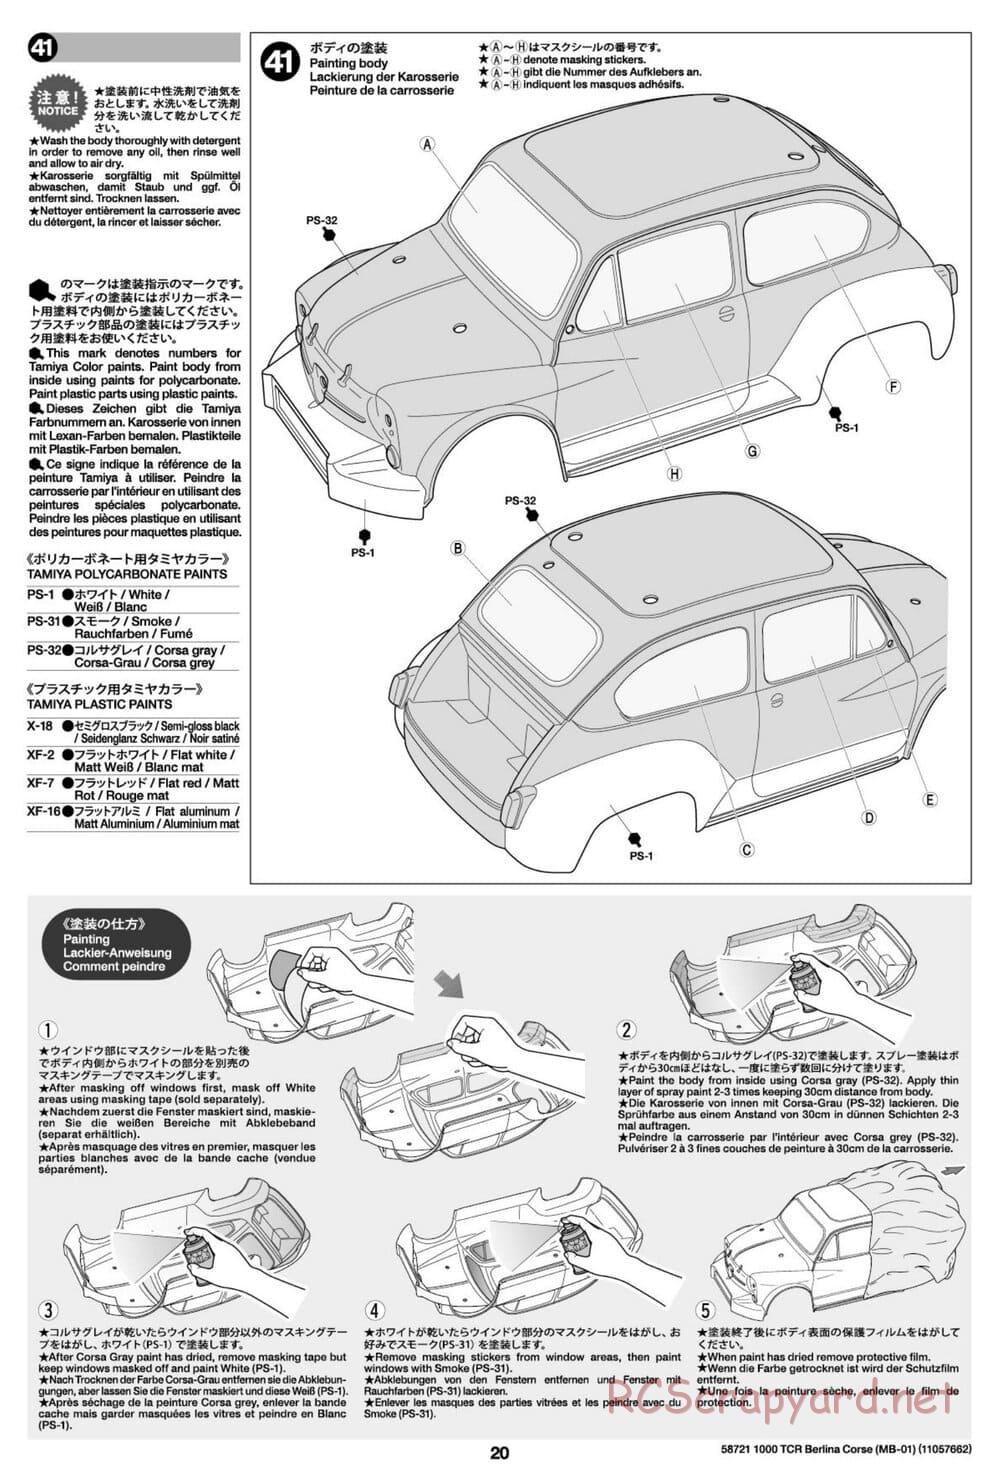 Tamiya - Fiat Abarth 1000 TCR Berlina Corsa - MB-01 Chassis - Manual - Page 20